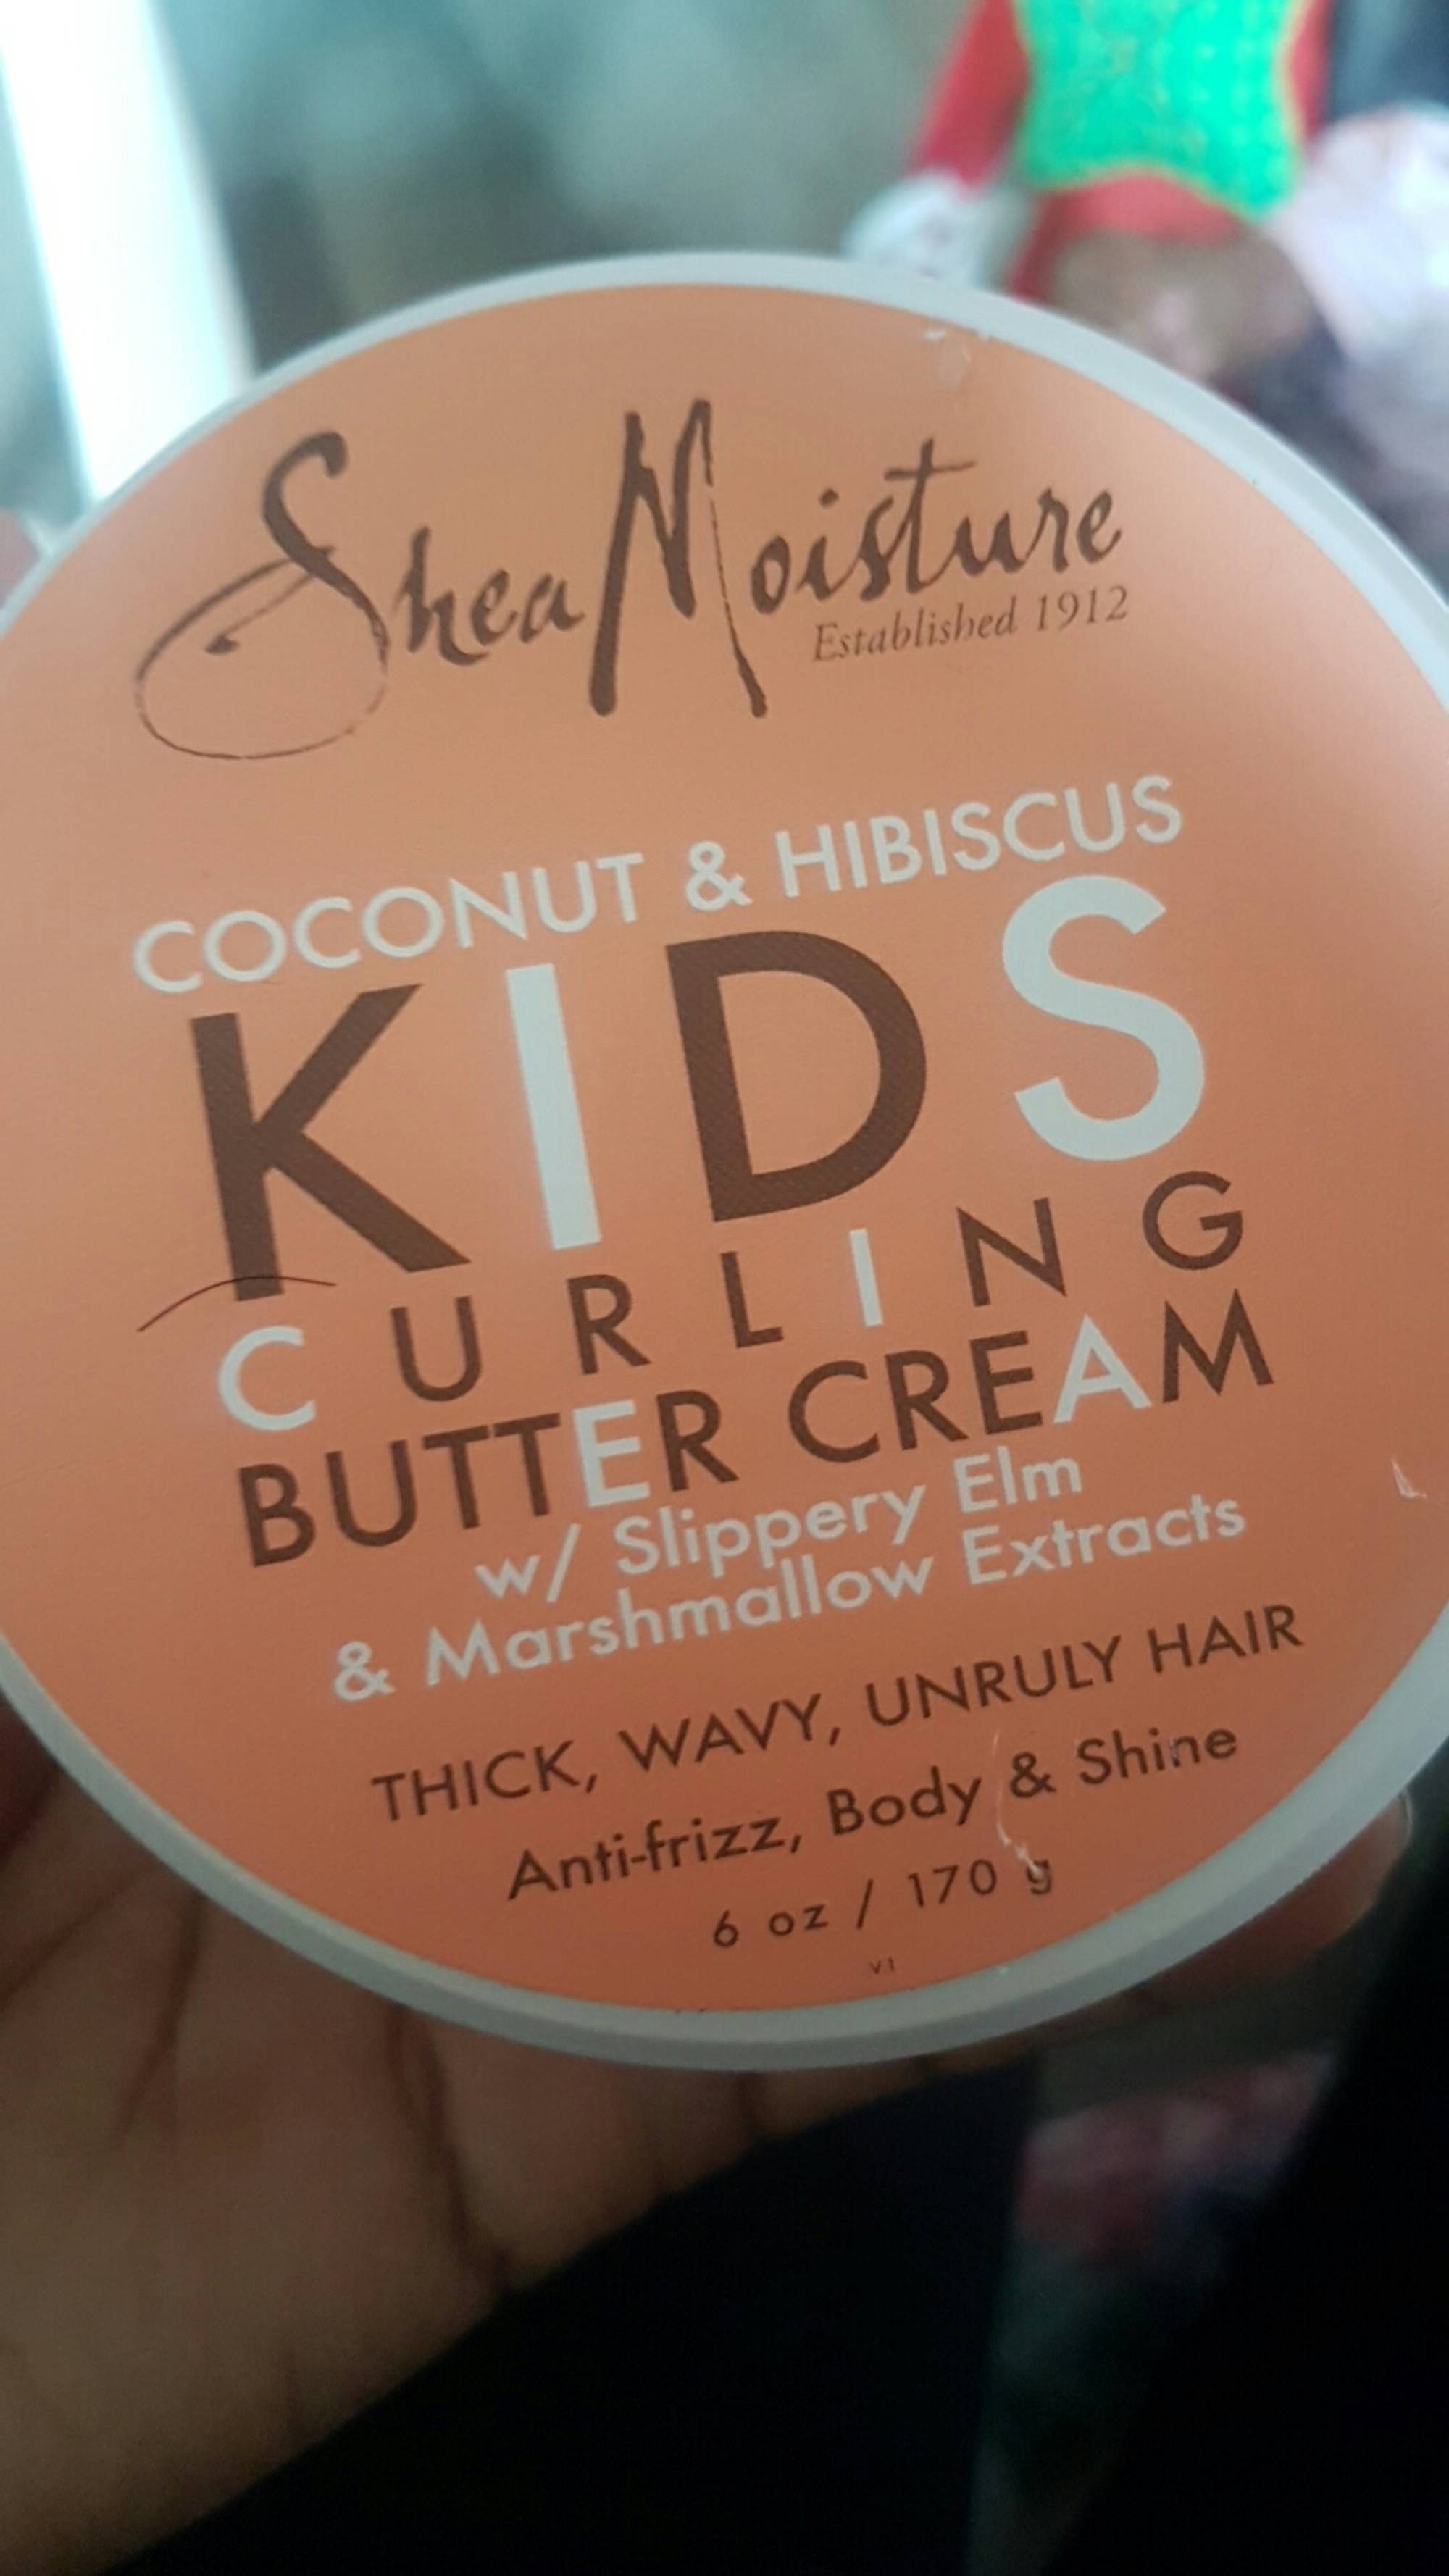 SHEA MOISTURE - Coconut & hibiscus - Kids curling butter cream